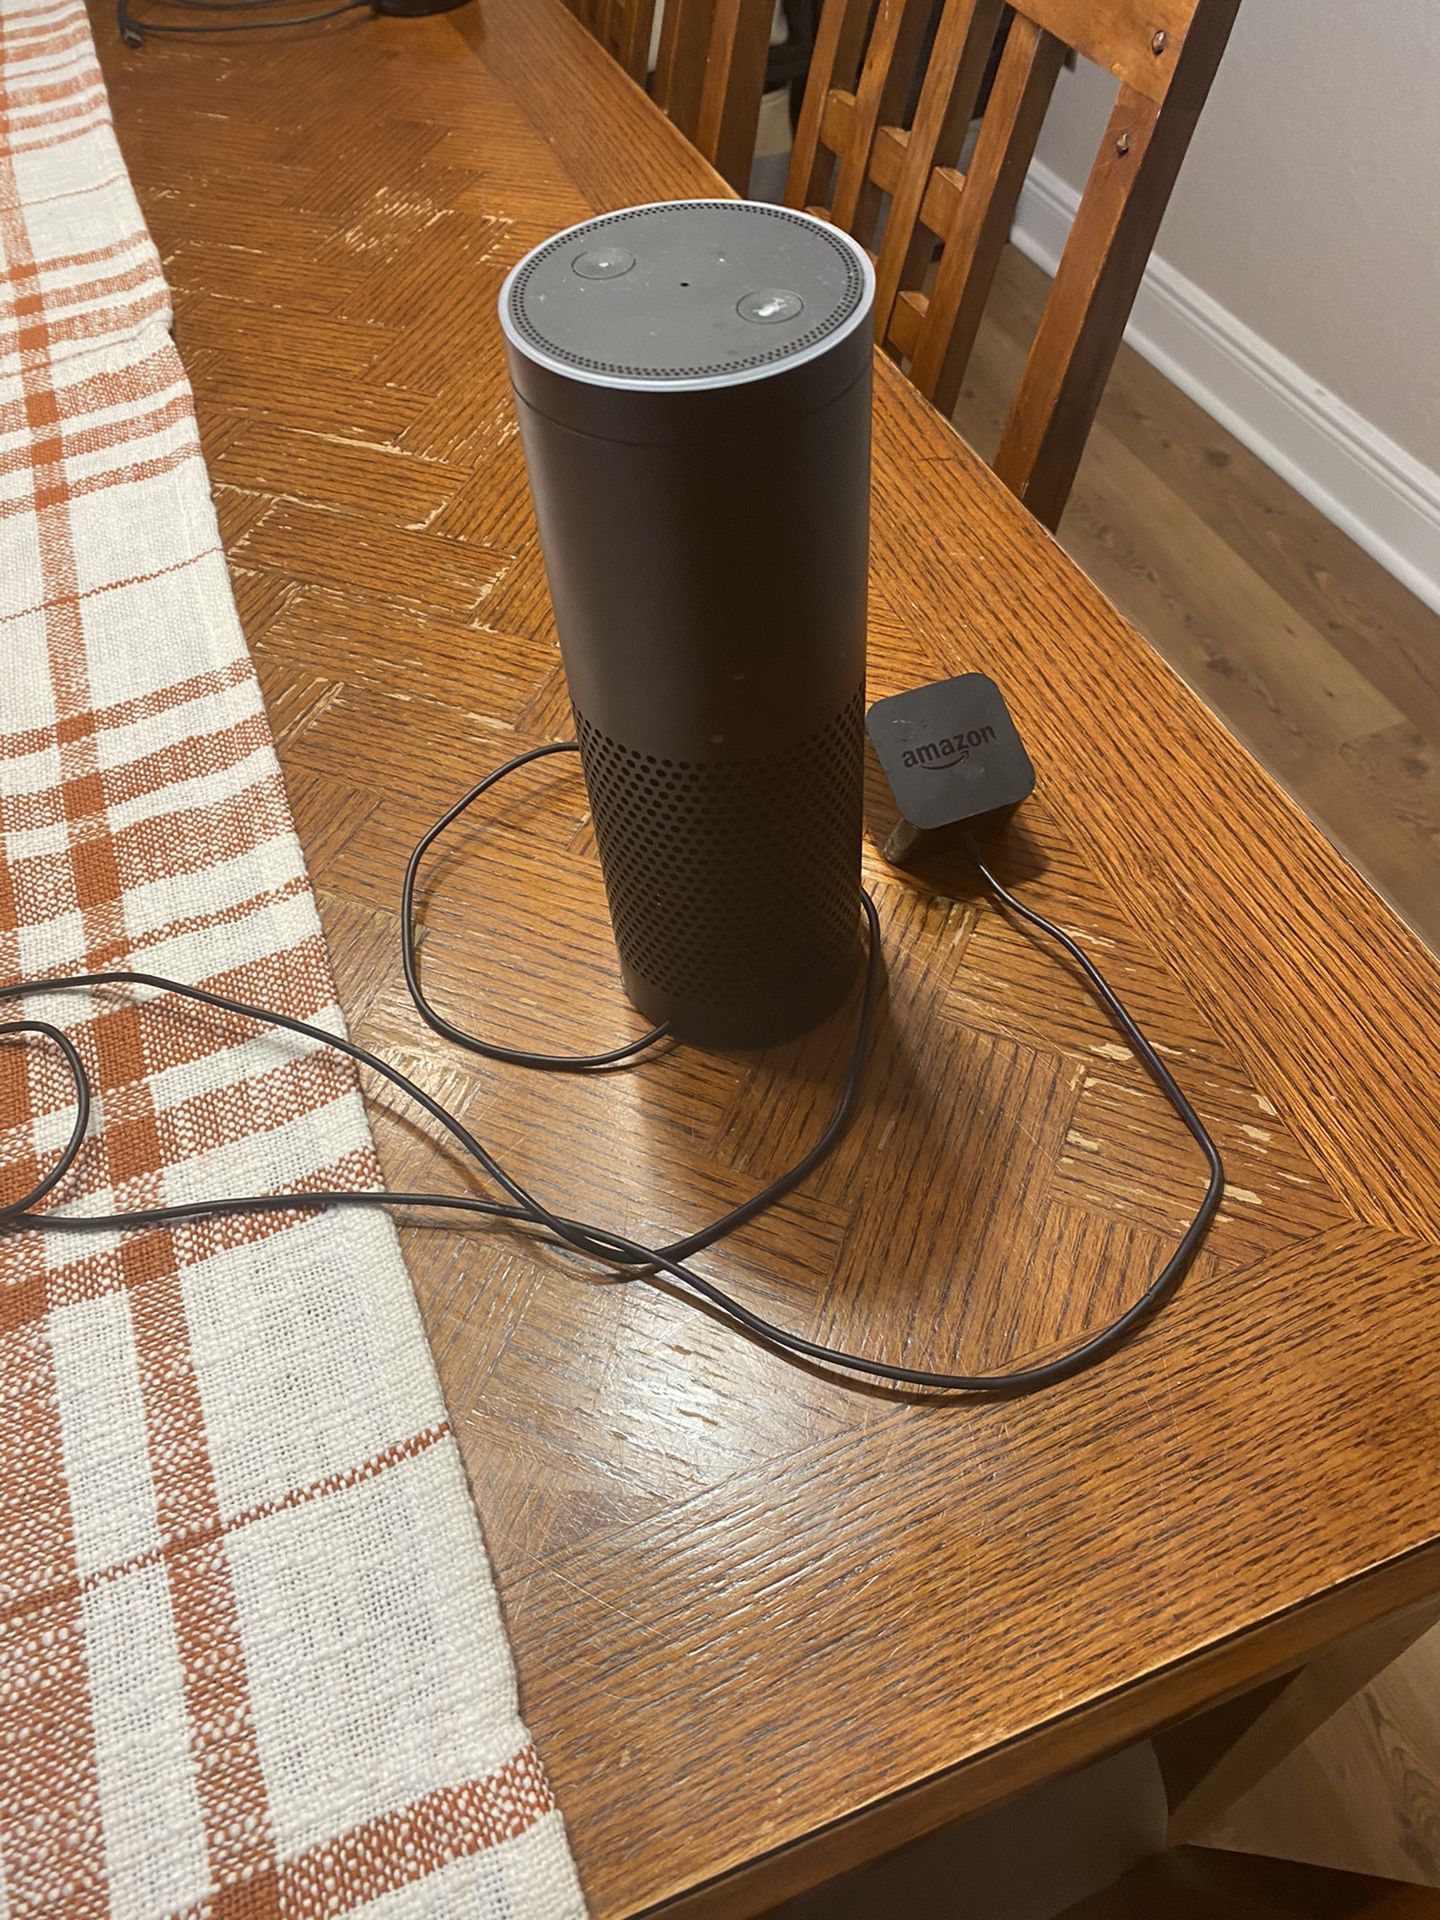 Gen 1 Amazon Echo + Echo Dot